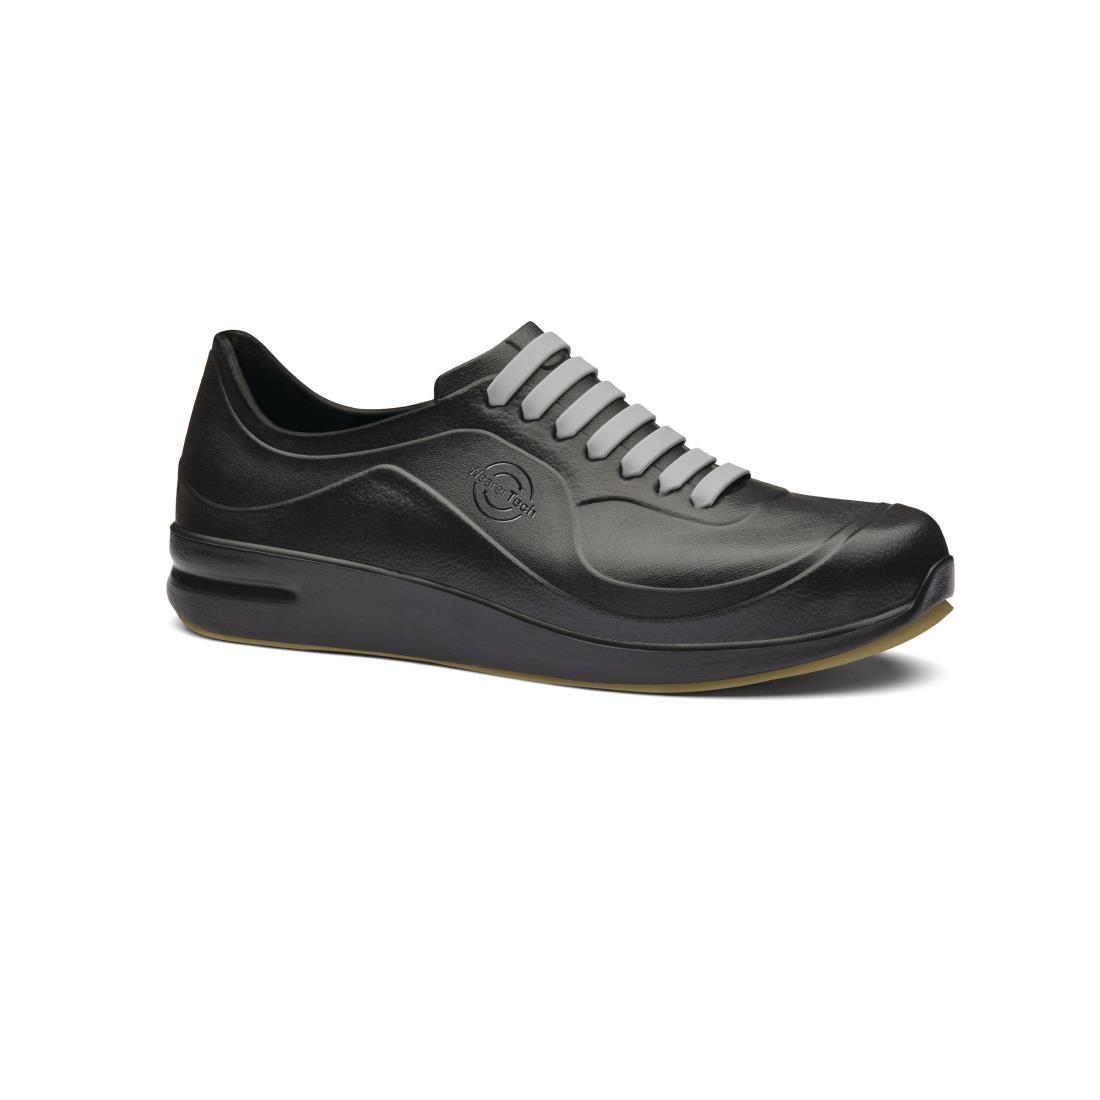 WearerTech Unisex Energise Black Safety Shoes Black 4 - BB190-37  - 1